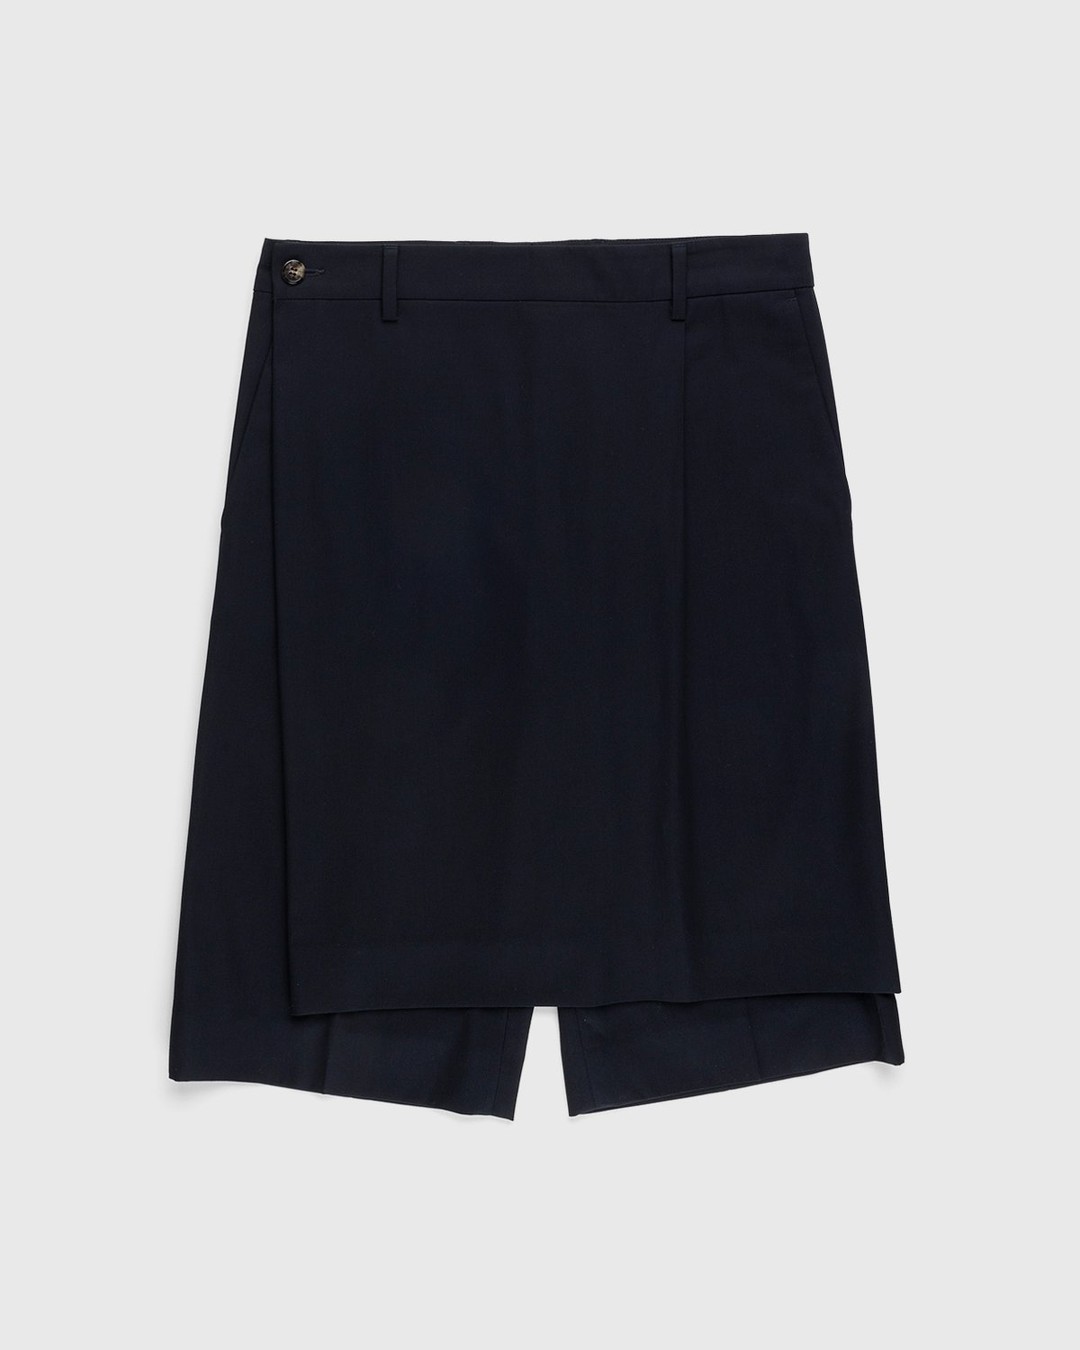 Dries van Noten – Parwin Shorts Navy - Shorts - Blue - Image 1